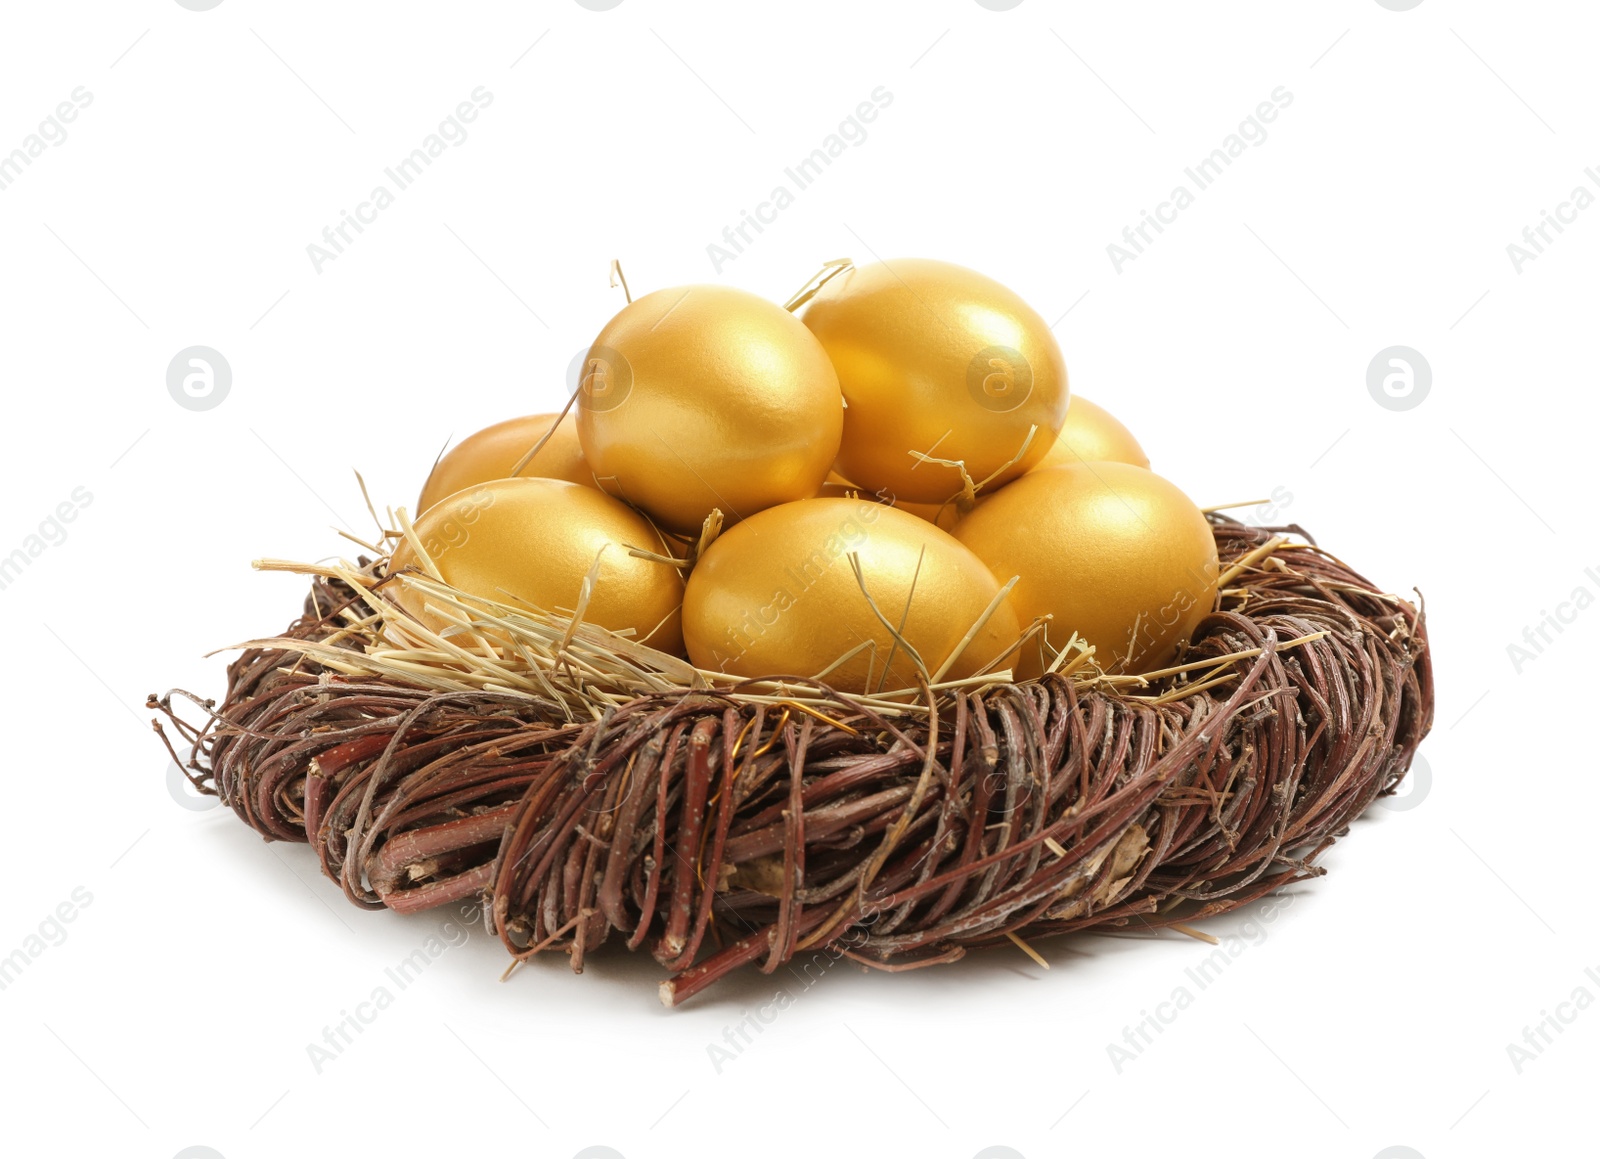 Photo of Shiny golden eggs in nest on white background